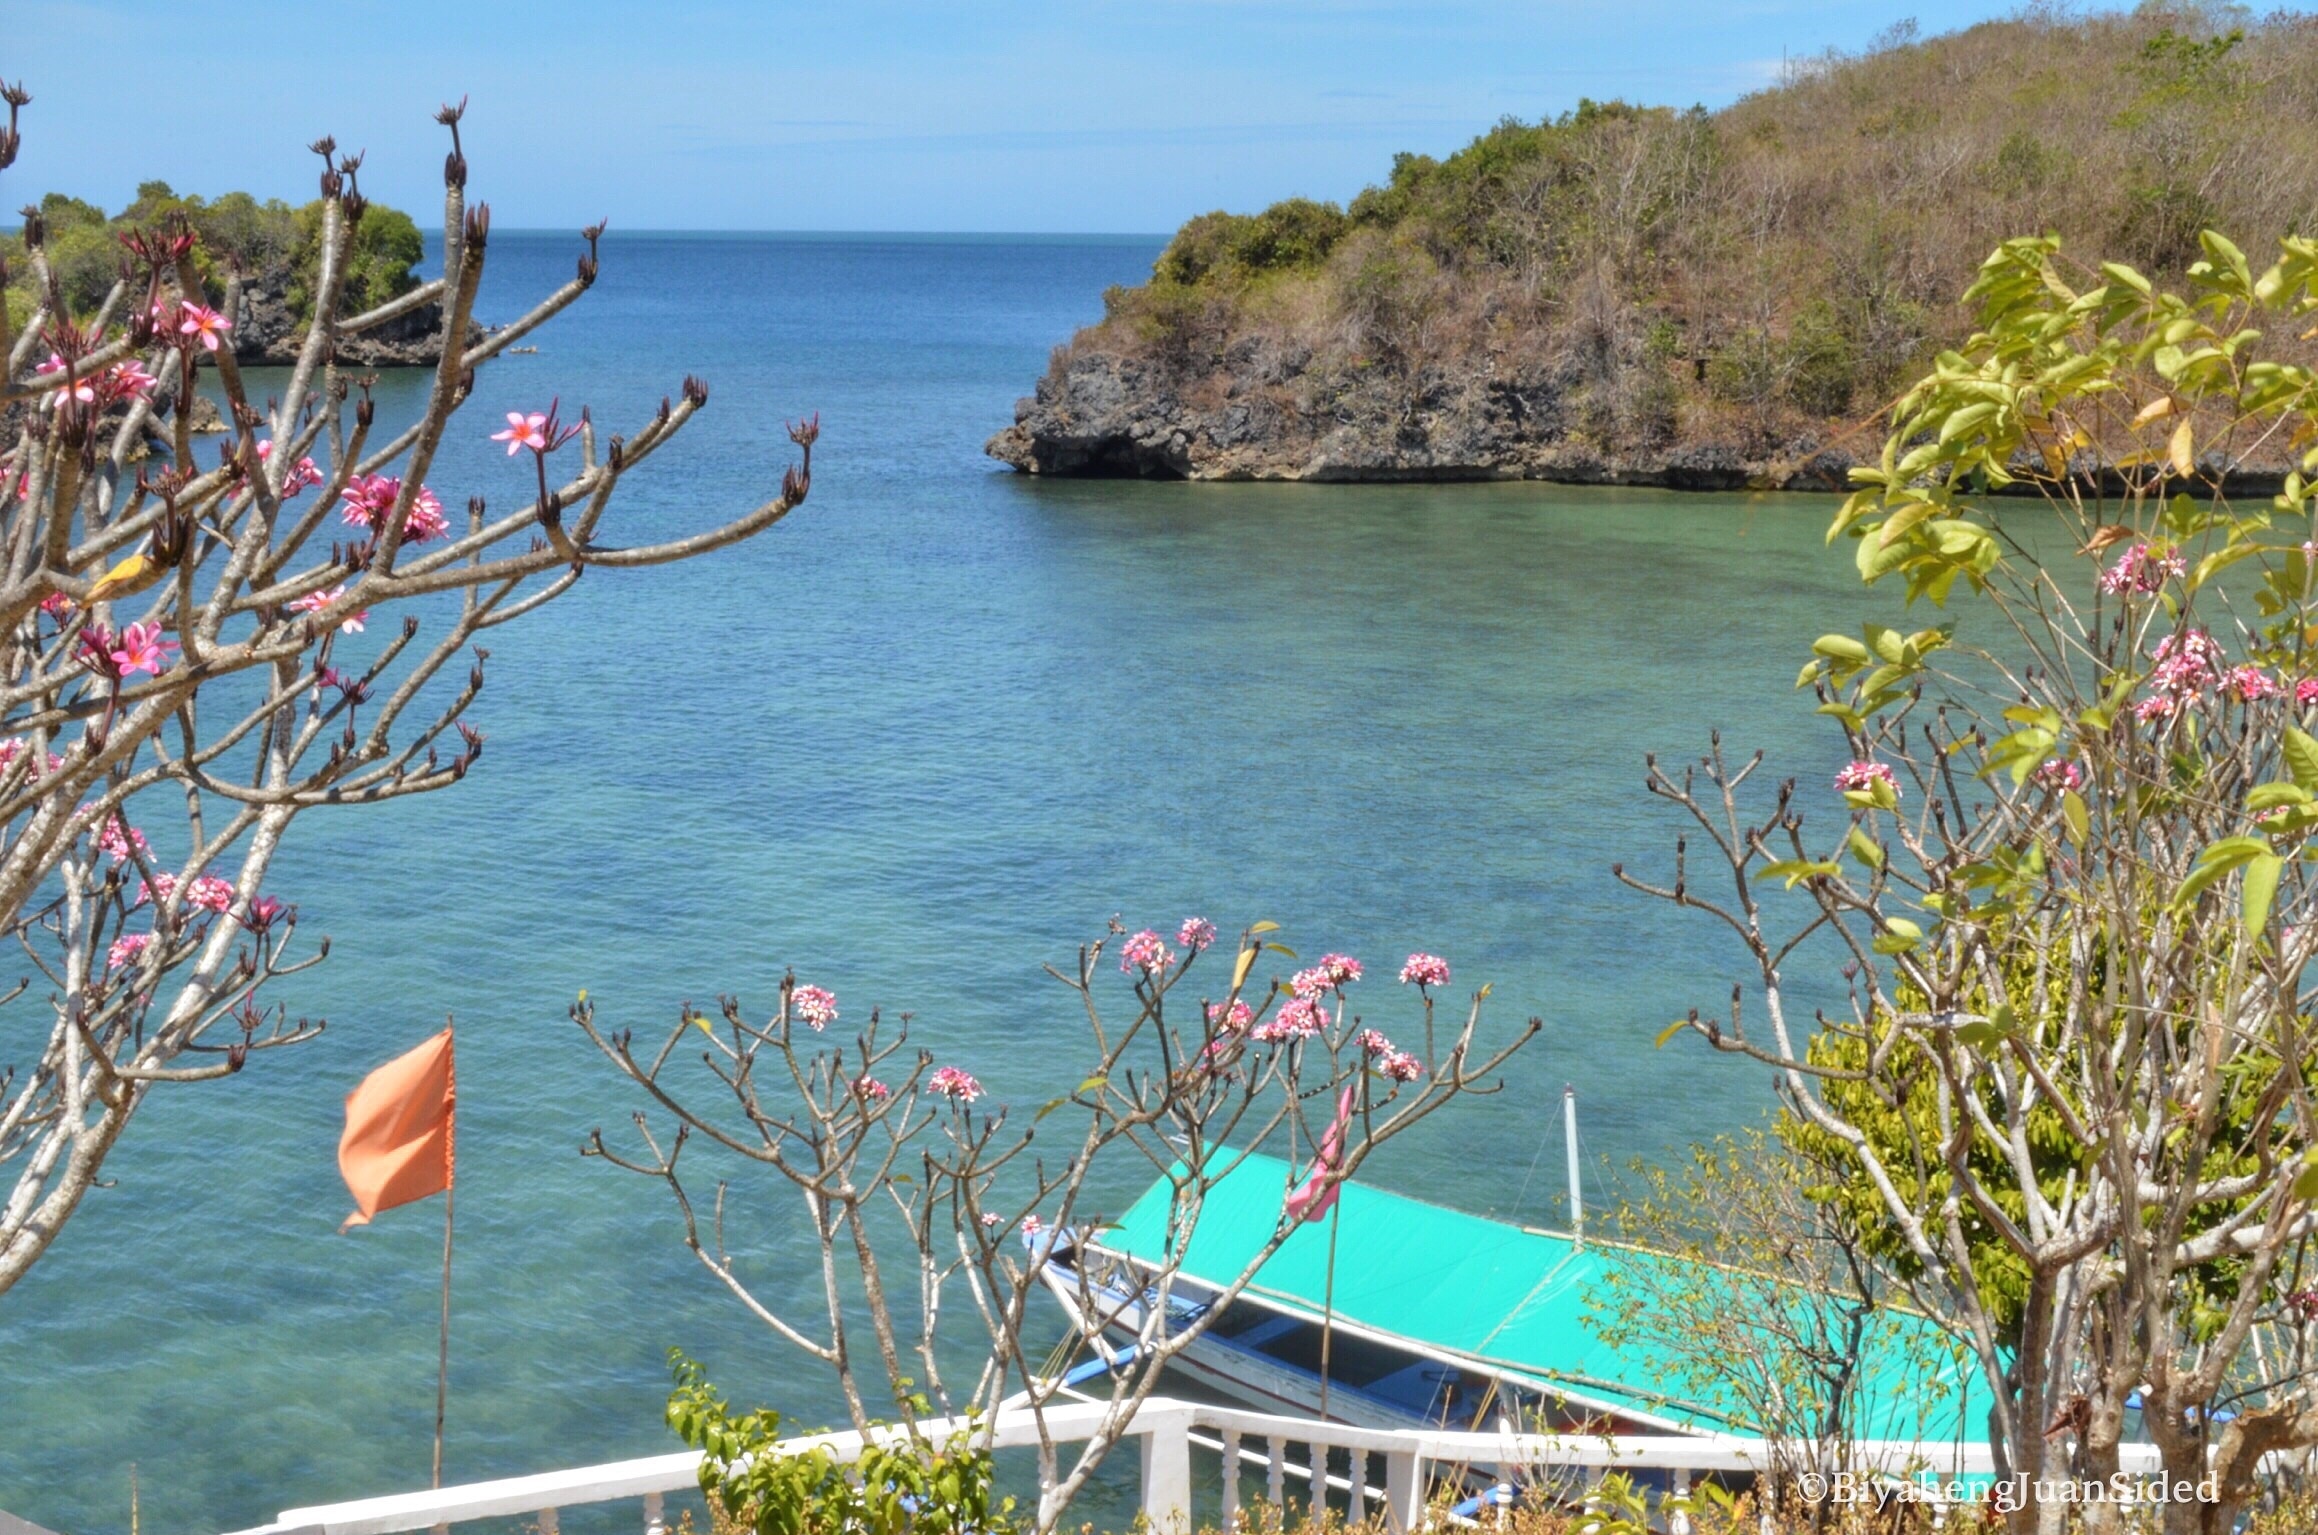 A sweet nirvana 

Lamuyan Island, Nueva Valencia, Guimaras. #tourismph #LonelyPlanet #fotografiaunited #fotografia #Philippines #biyahengjuansided #explorethephilippineschallenge 

For more information, pls go to this link:
http://biyahengjuansided.com/2015/06/24/province-of-guimaras-a-humble-and-sweet-nirvana/